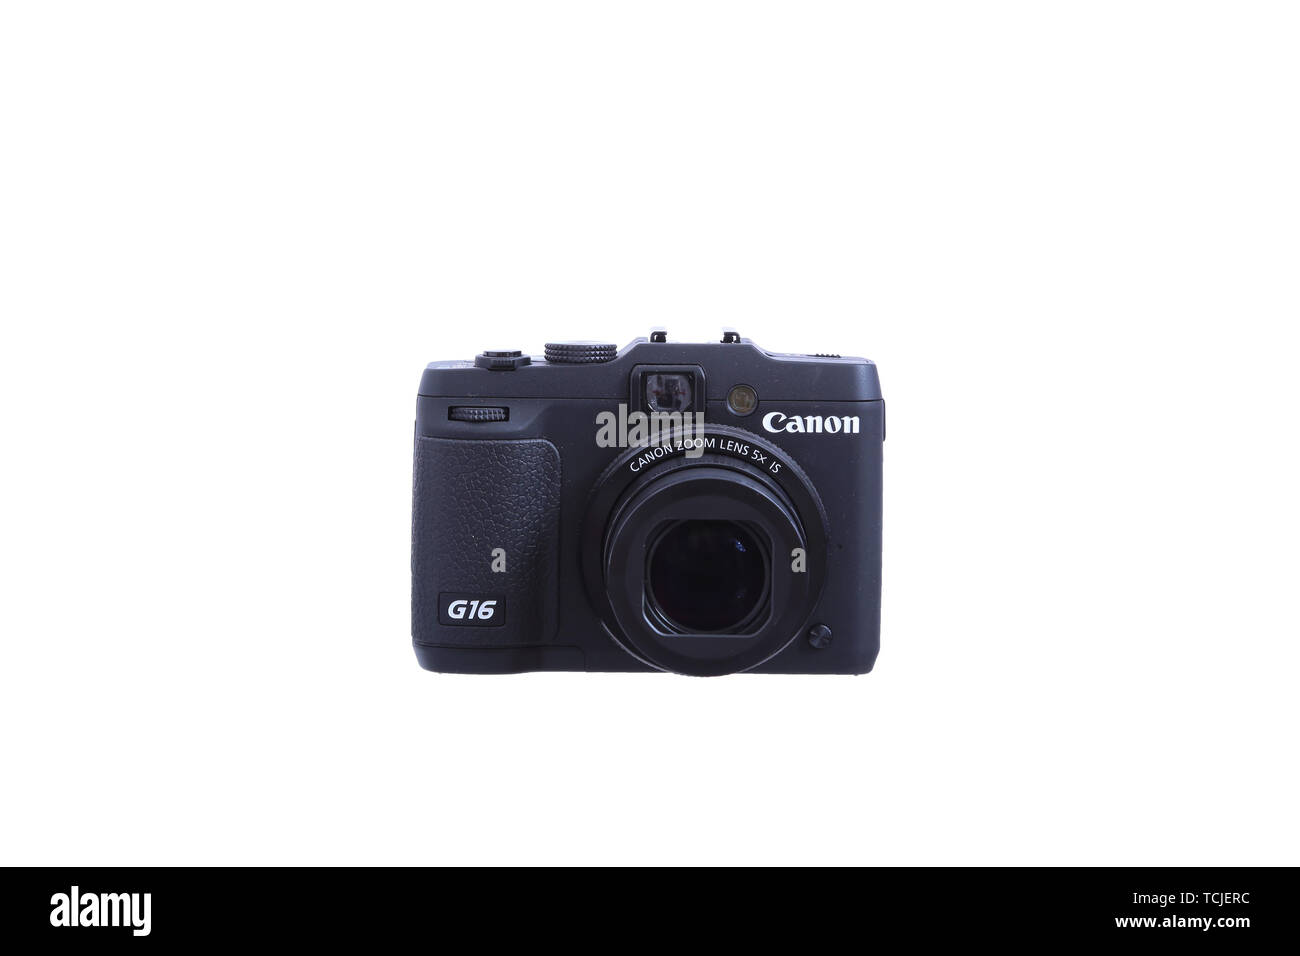 KYIV, UKRAINE - JULE 10, 2015: Photo of a compact camera, Canon PowerShot G16 isolated on white Stock Photo